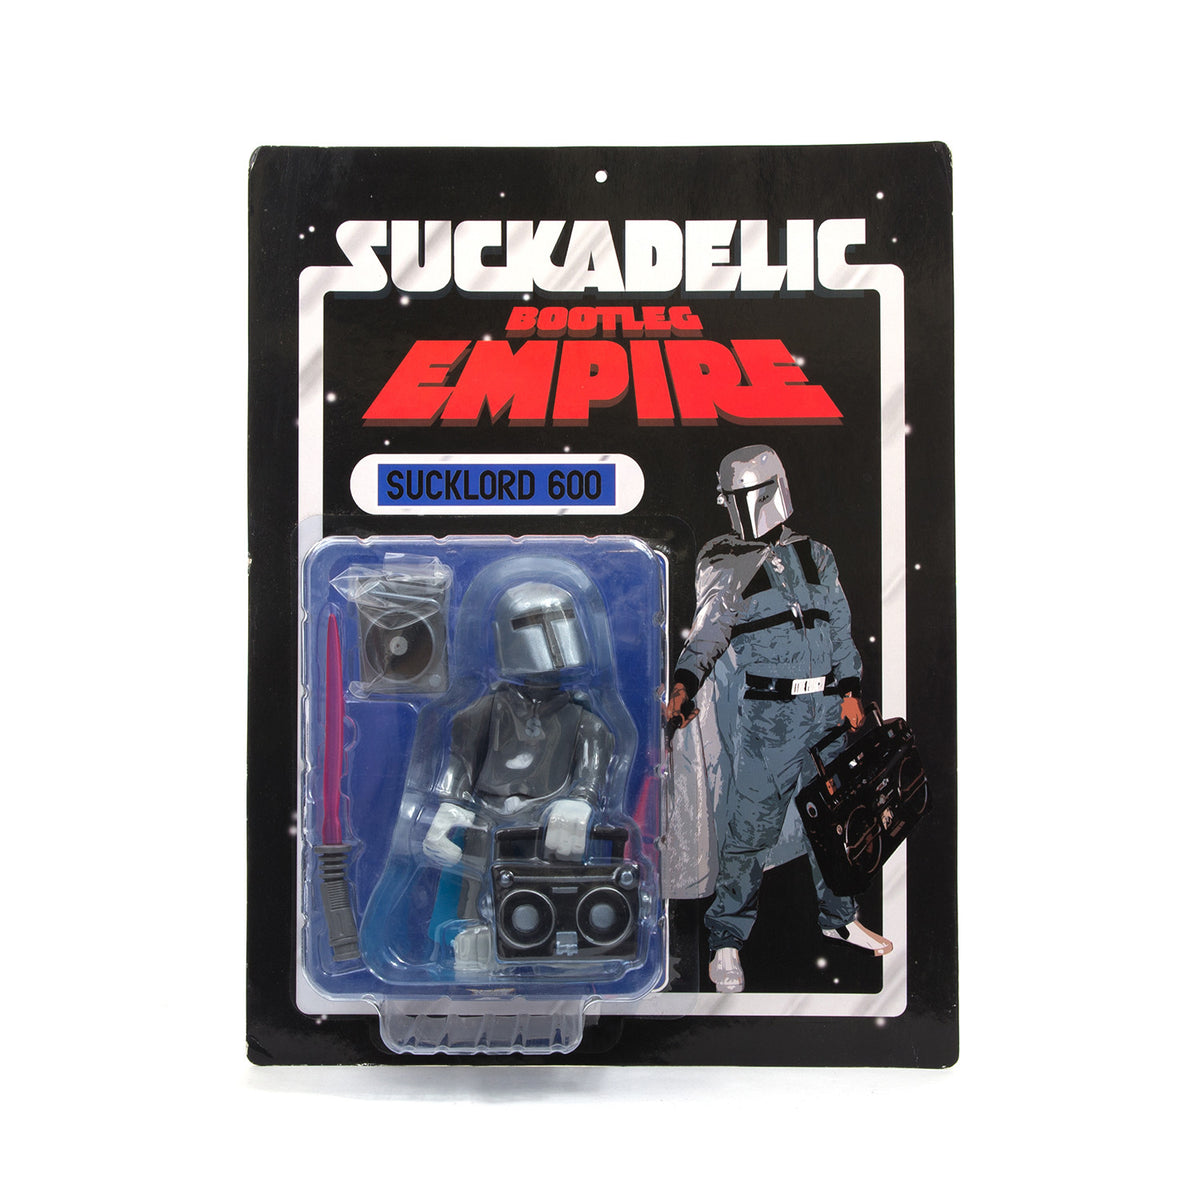 Suckadelic Bootlegs Bootleg Empire Sucklord 600 - Concrete